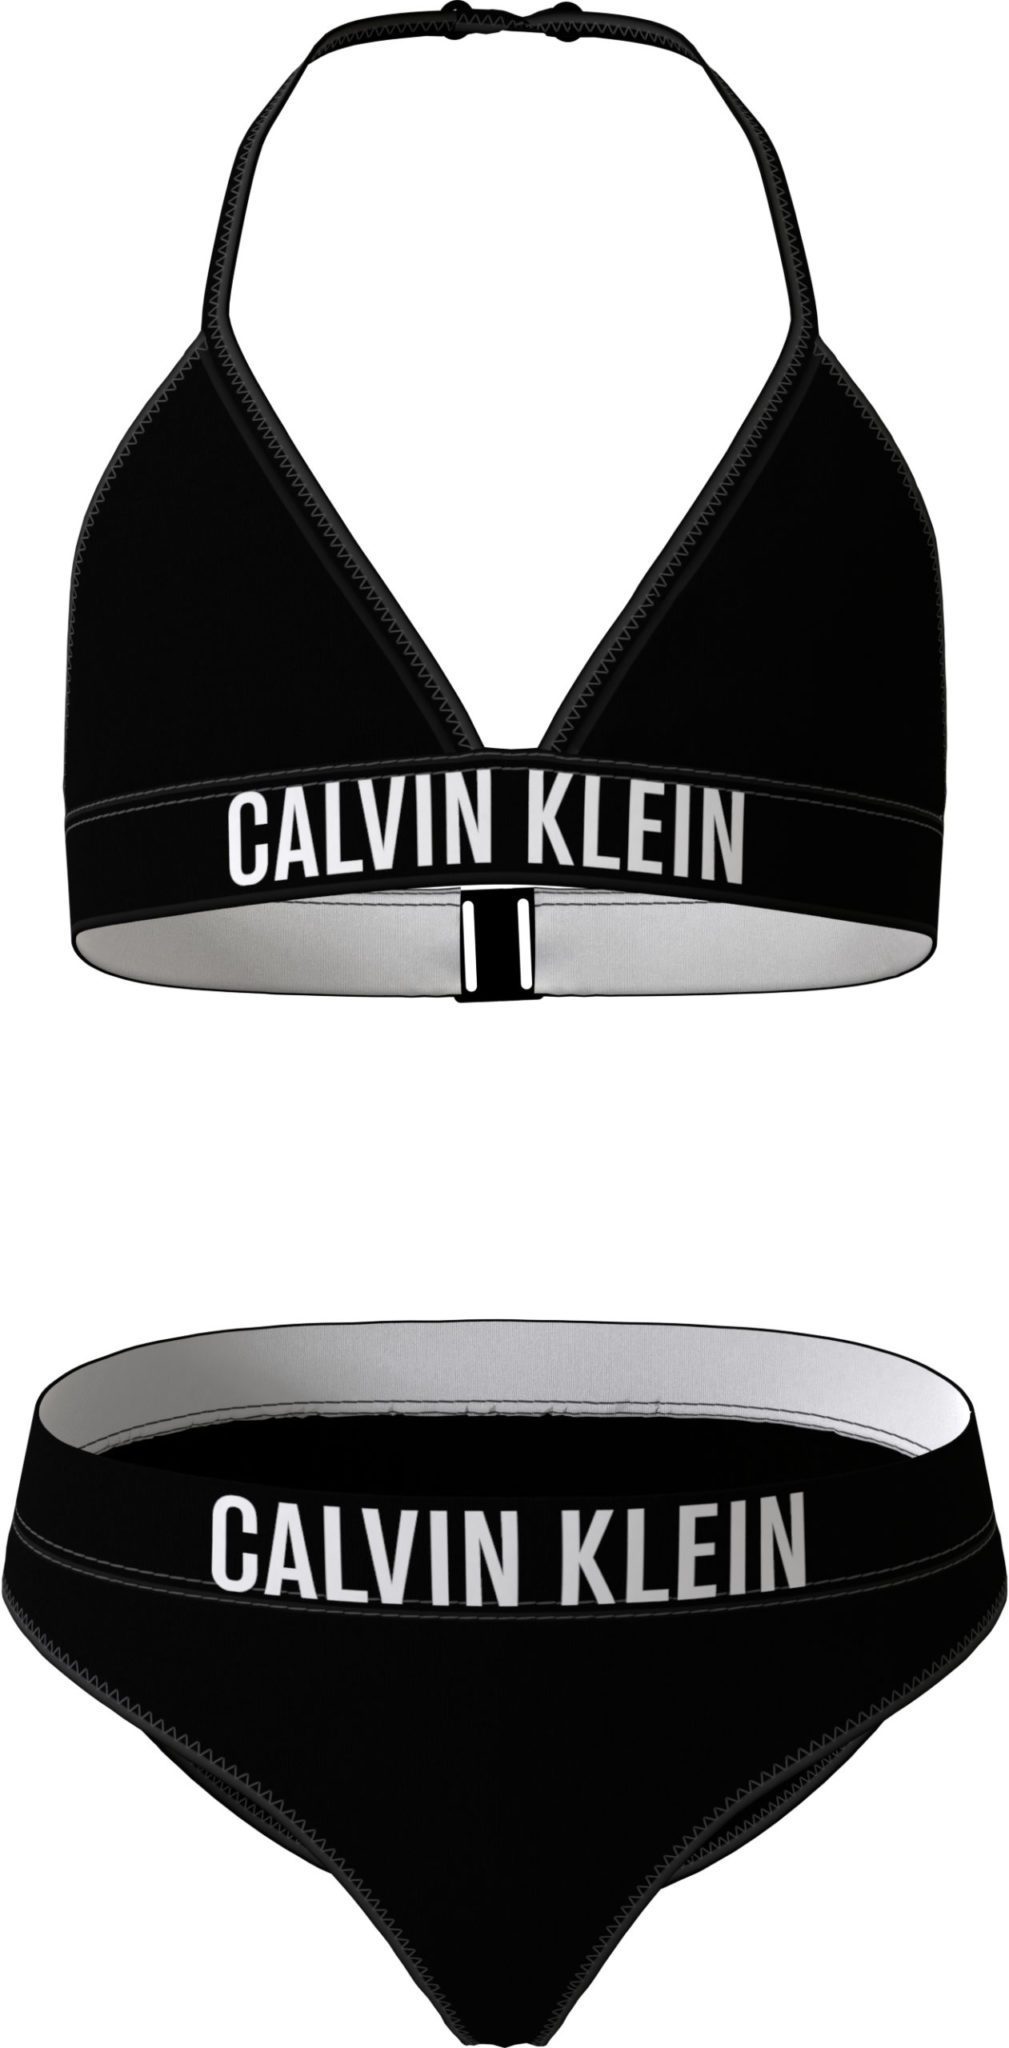 Calvin Klein Bikini 0399 - Little Angels Childrenswear